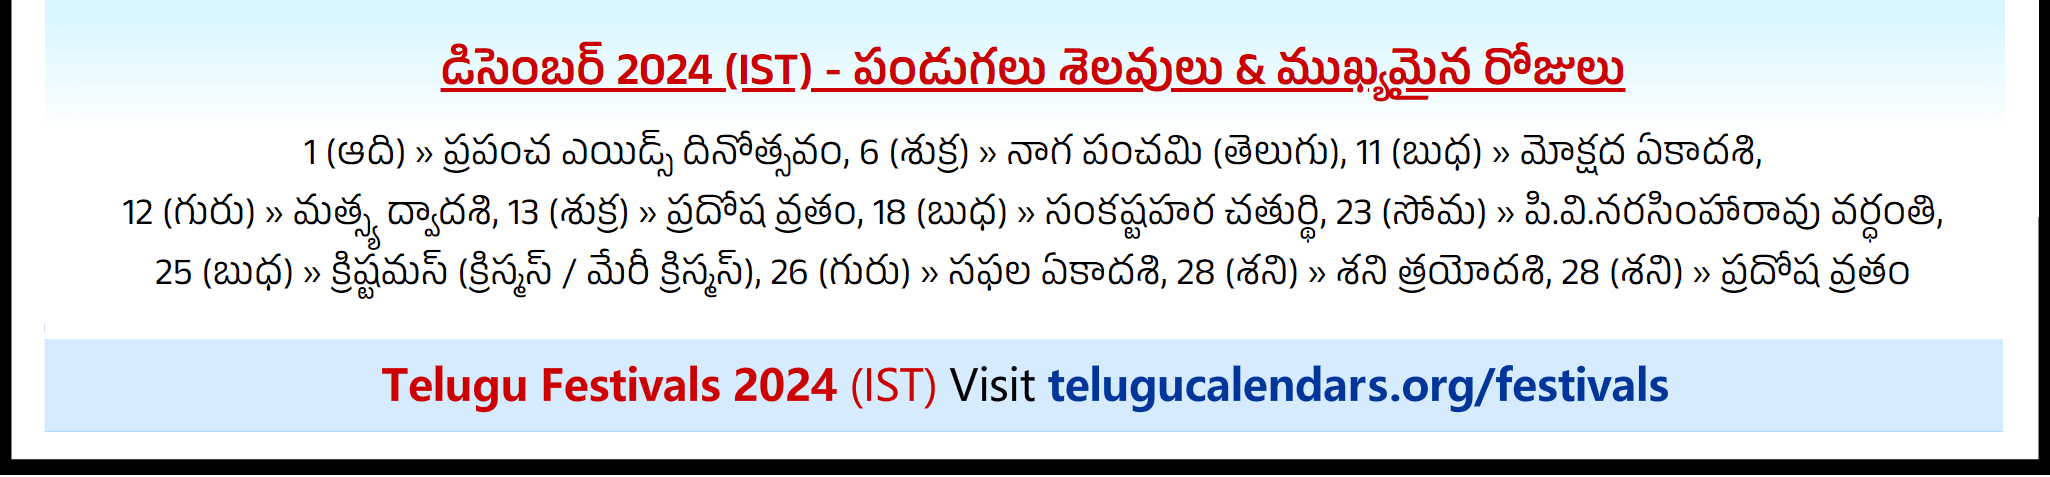 Telugu Festivals 2024 December San Francisco